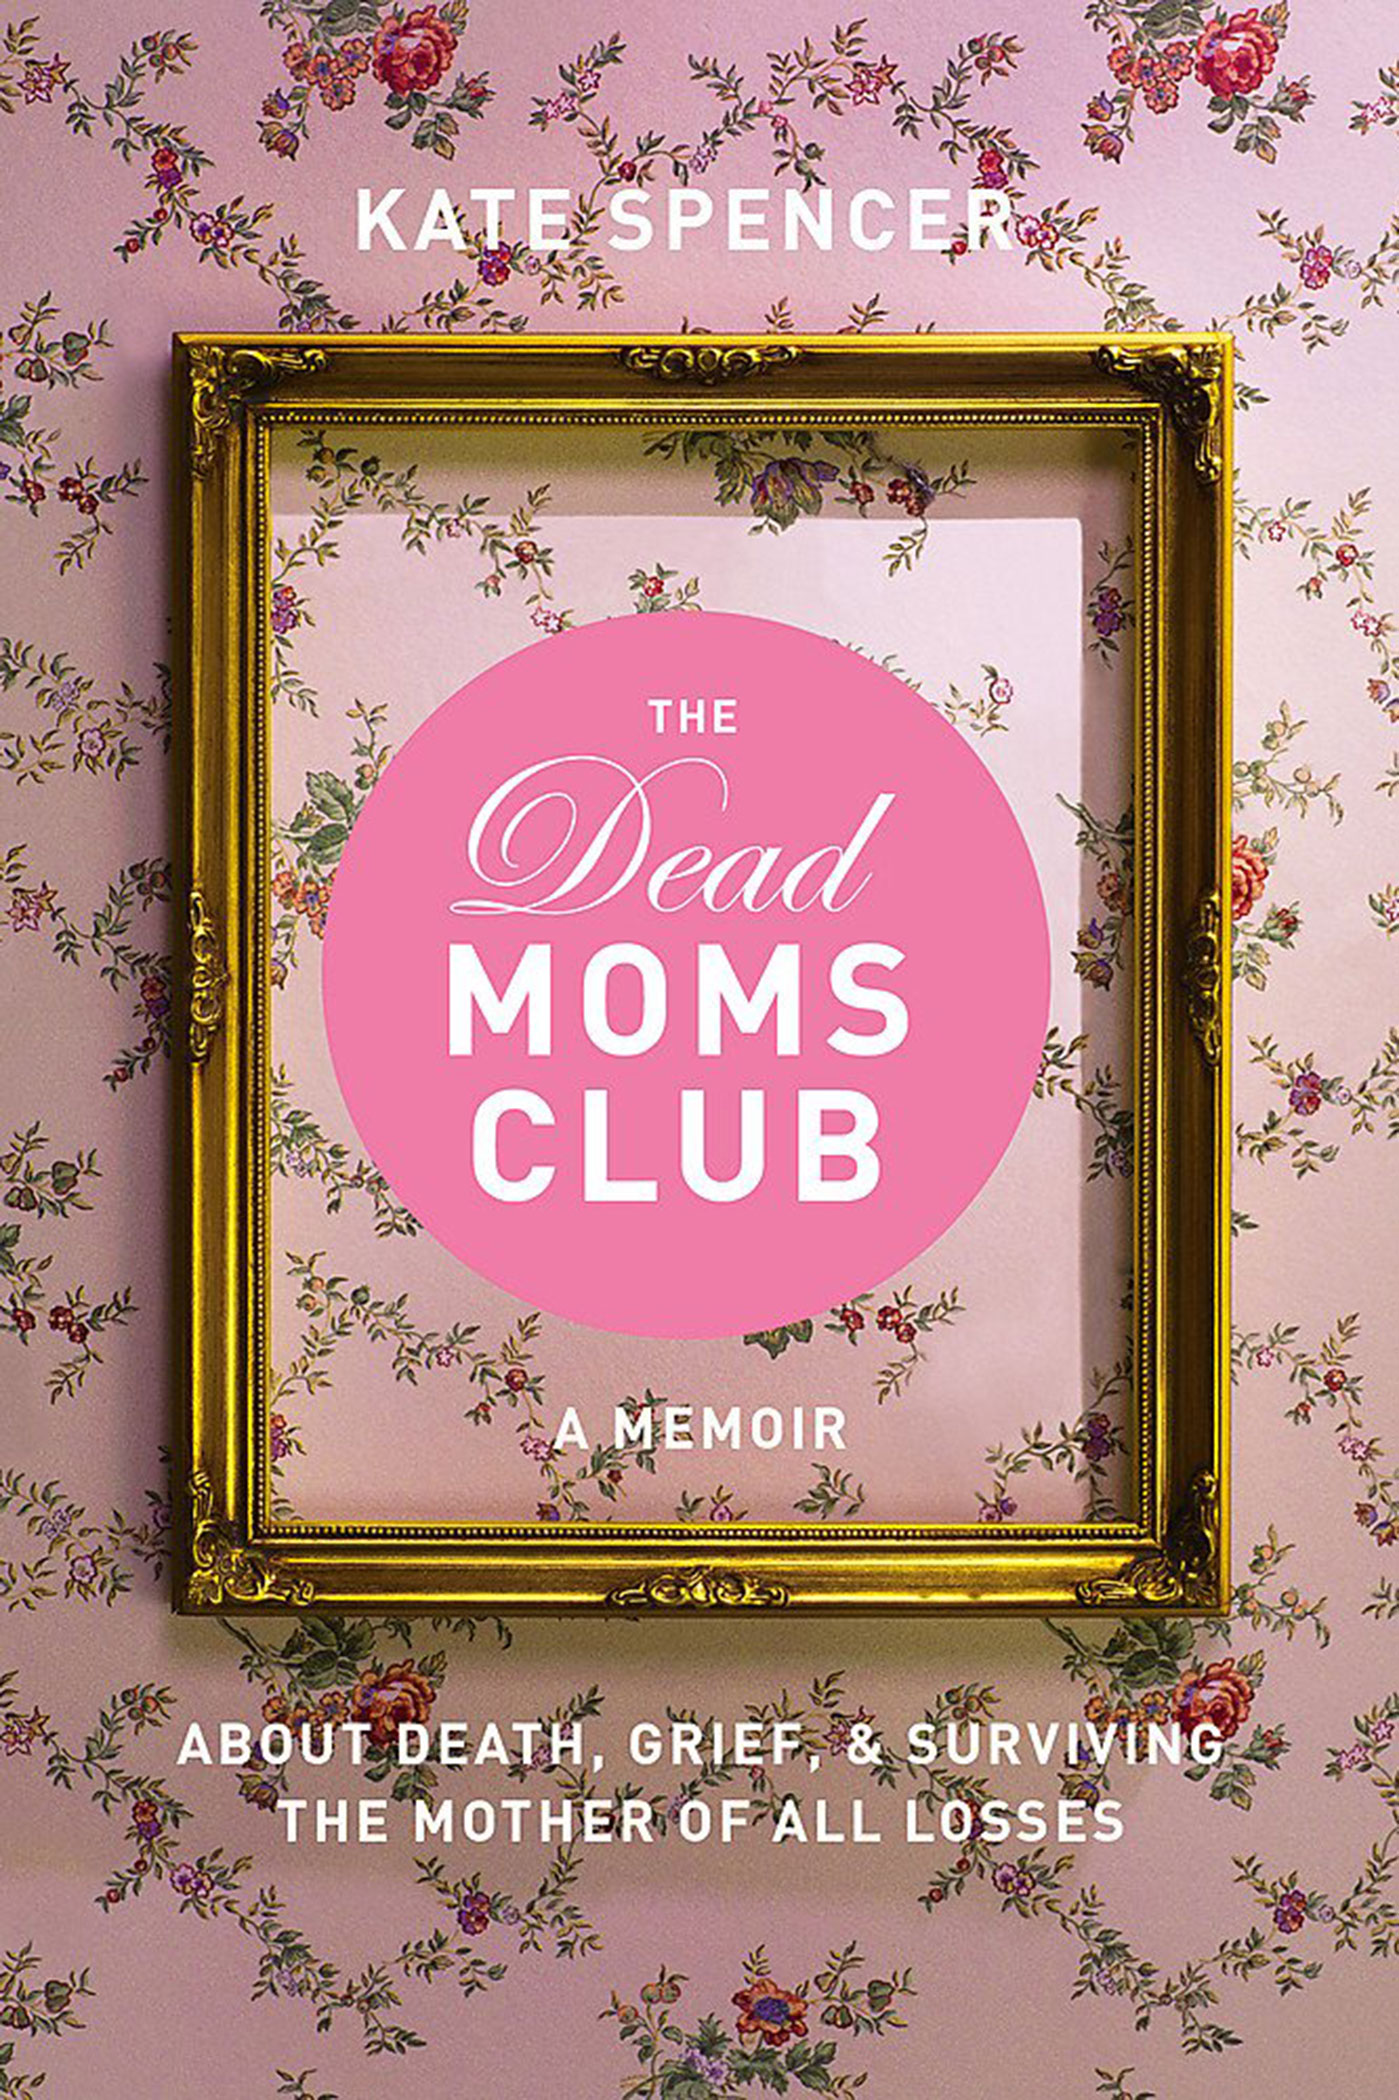 The Dead Moms Club book cover